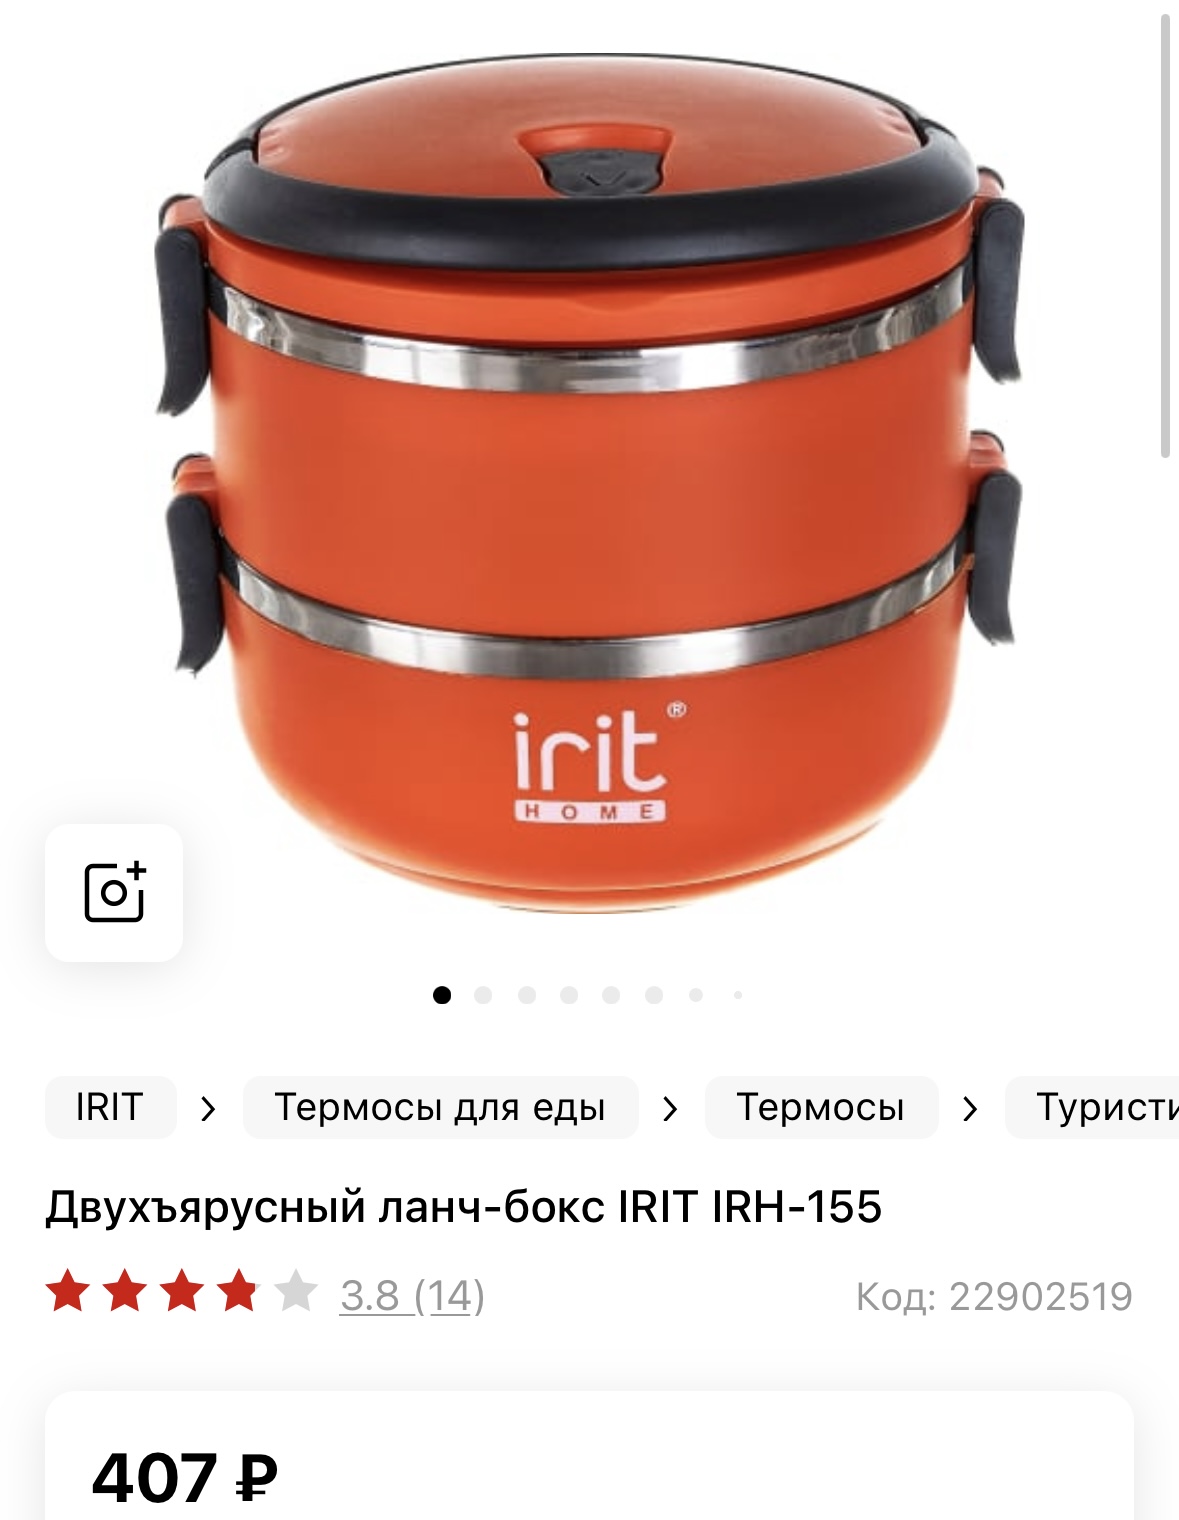 Двухъярусный ланч-бокс IRIT IRH-155